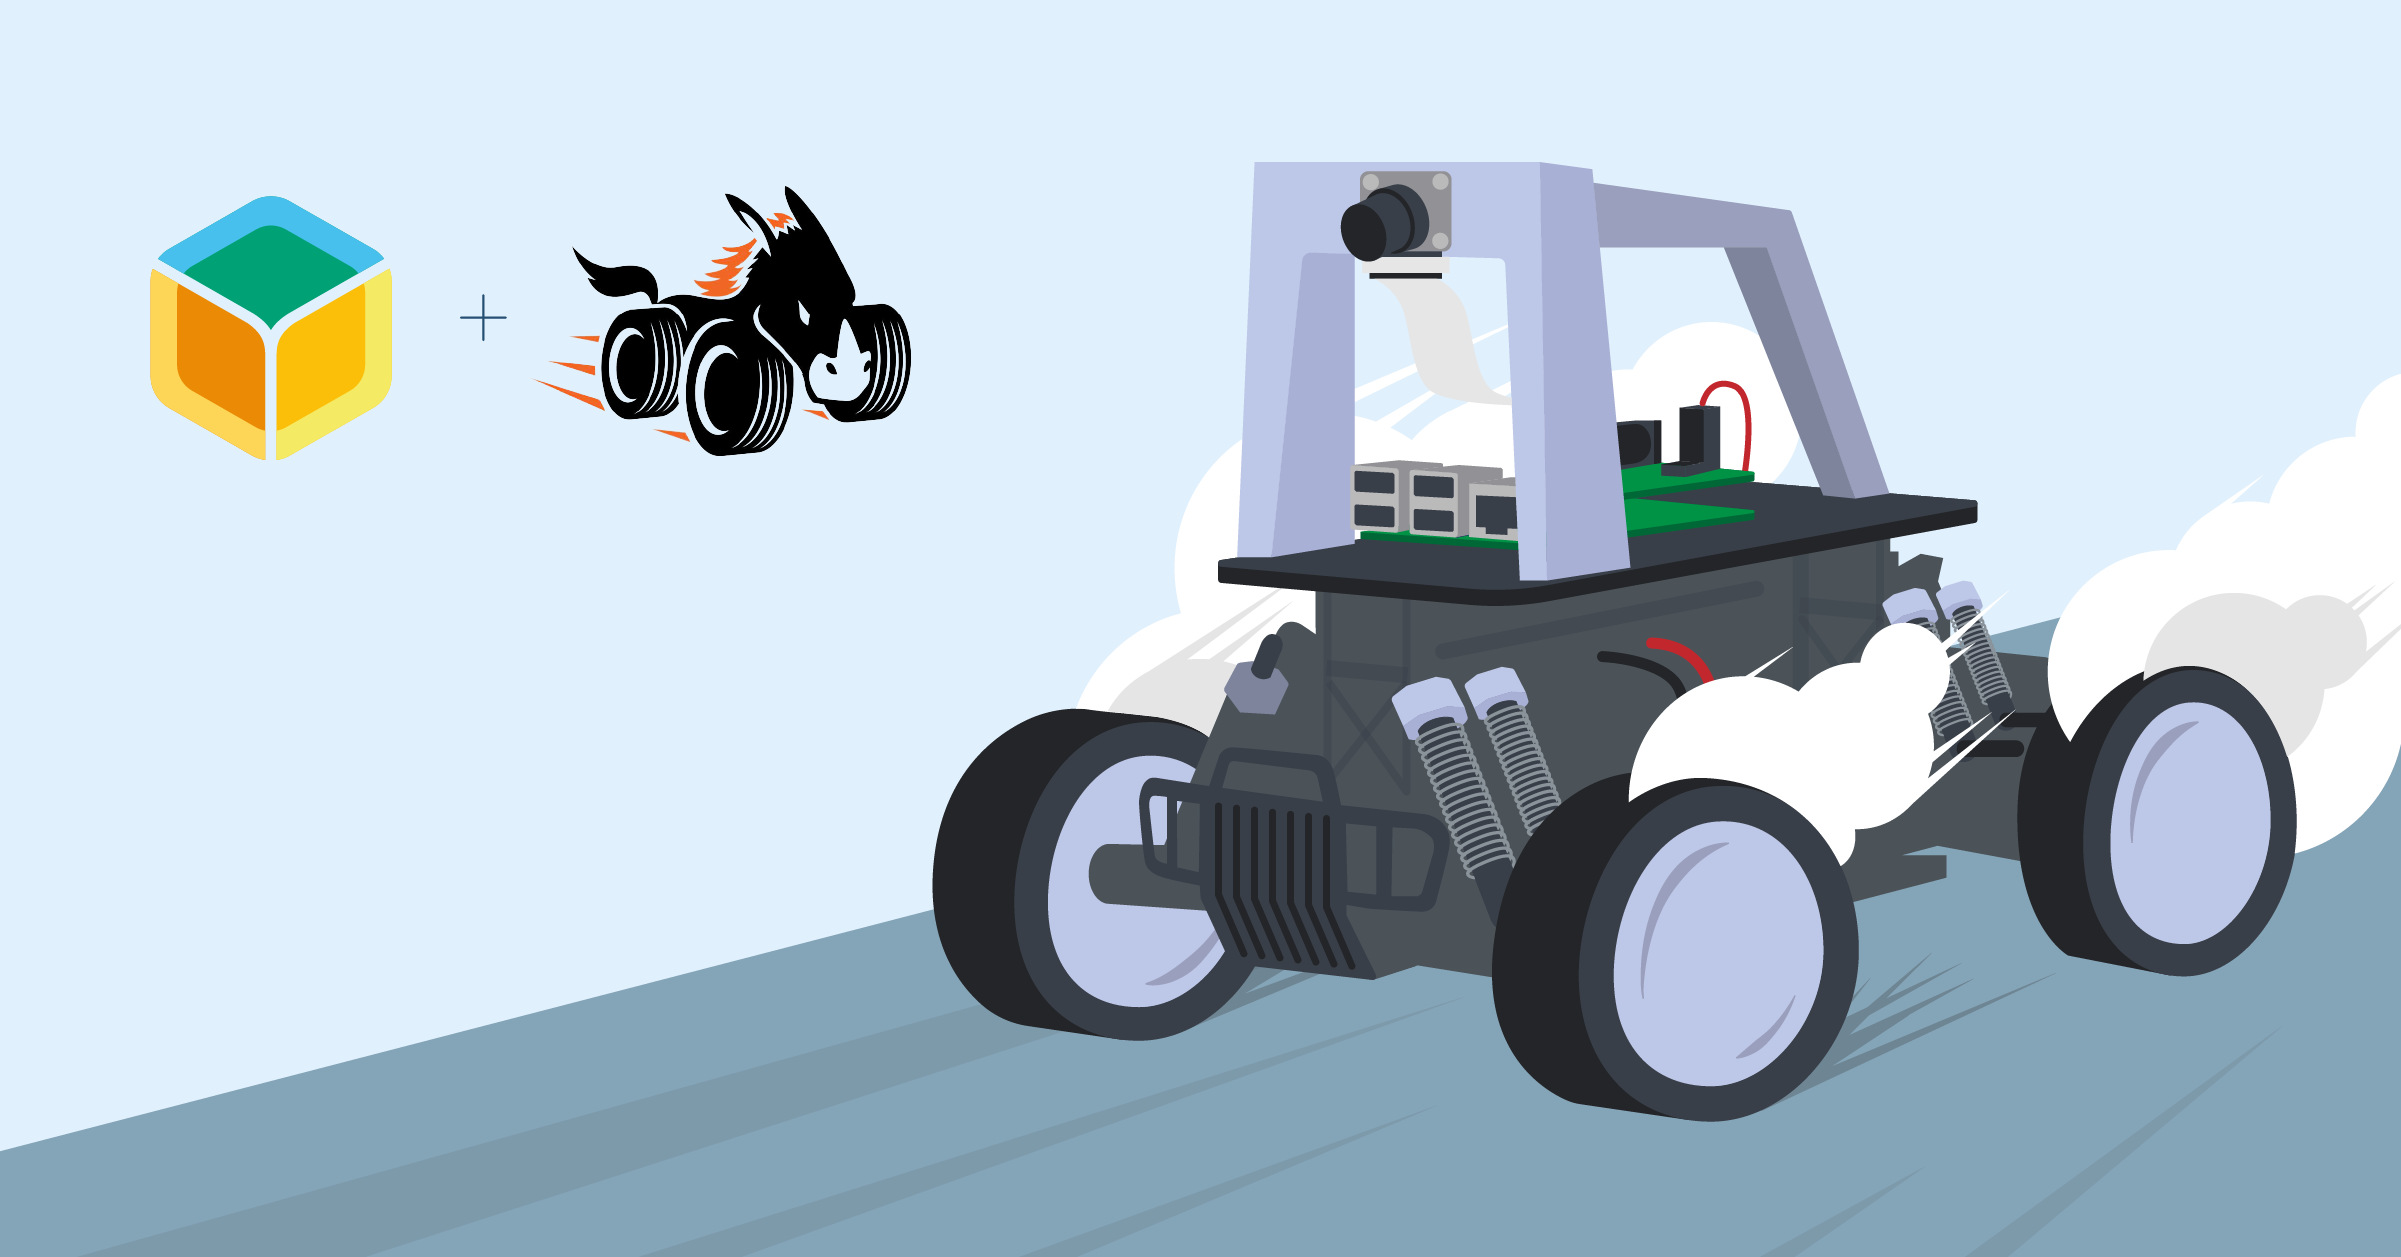 Build an autonomous vehicle using balena and DonkeyCar